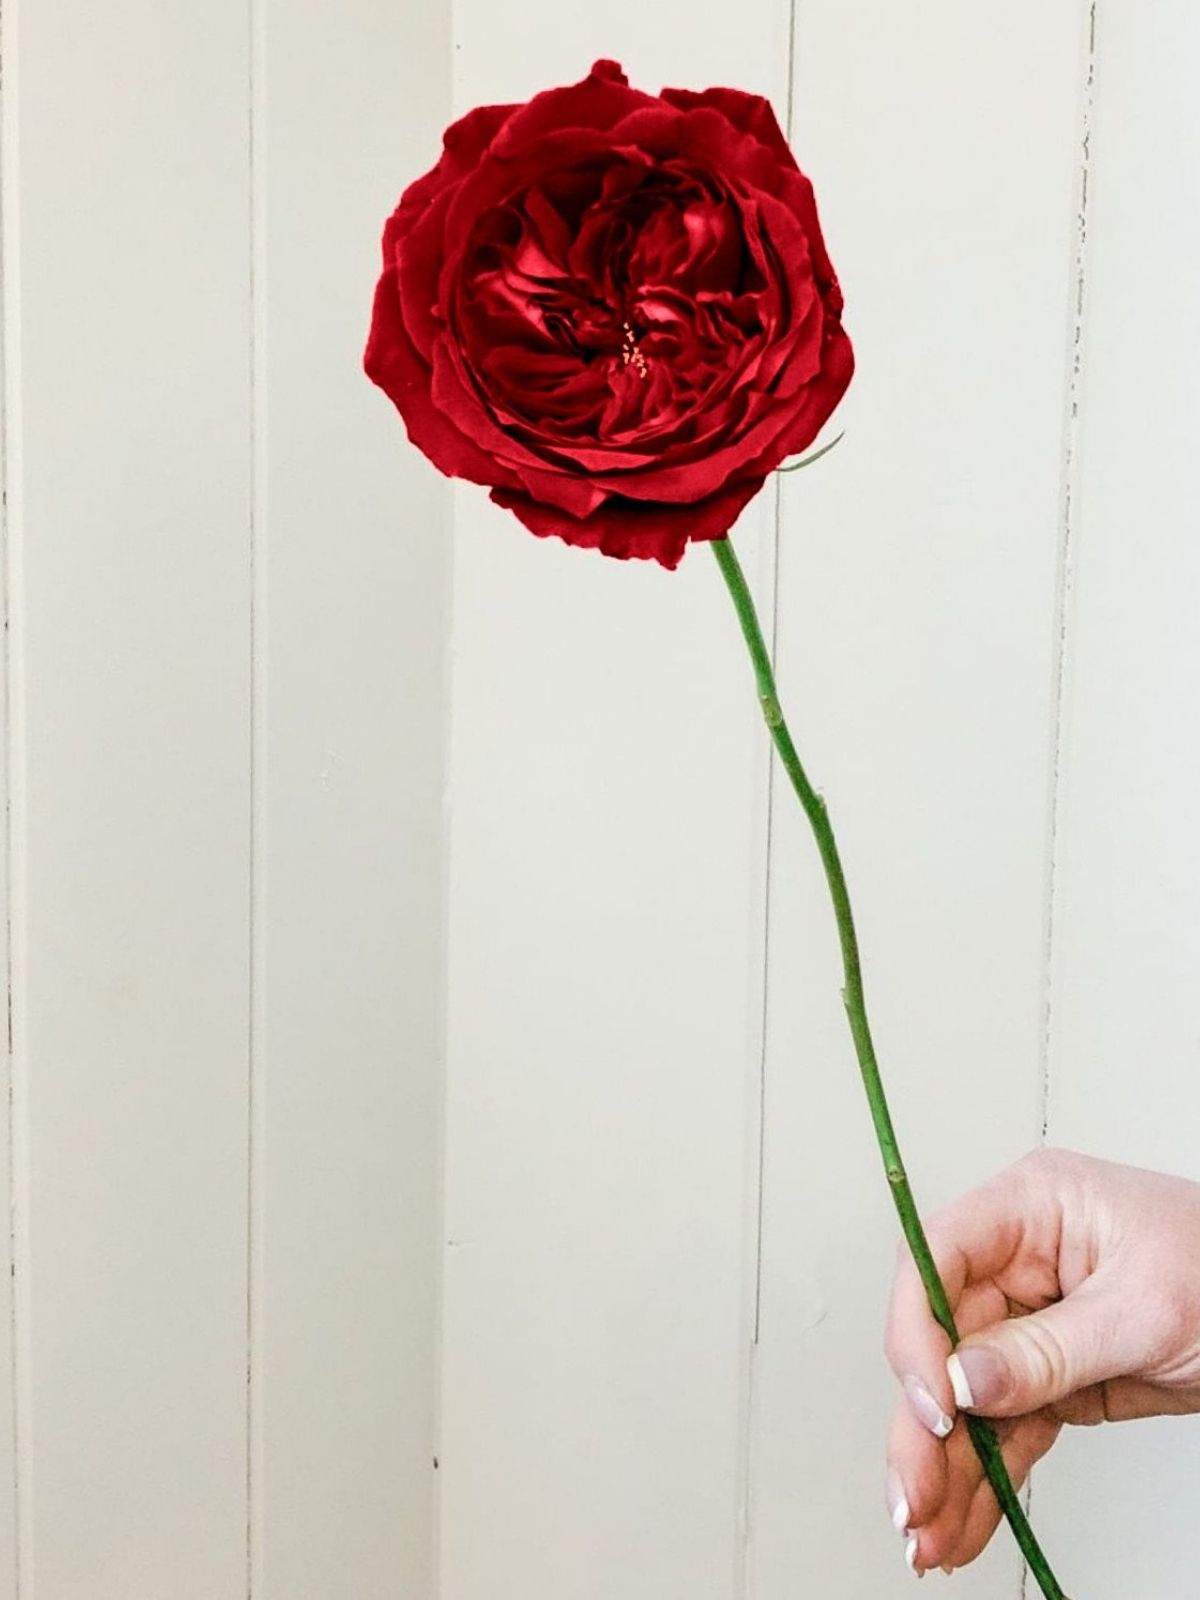 Valentines roses: Rose 'Tess' by David Austin